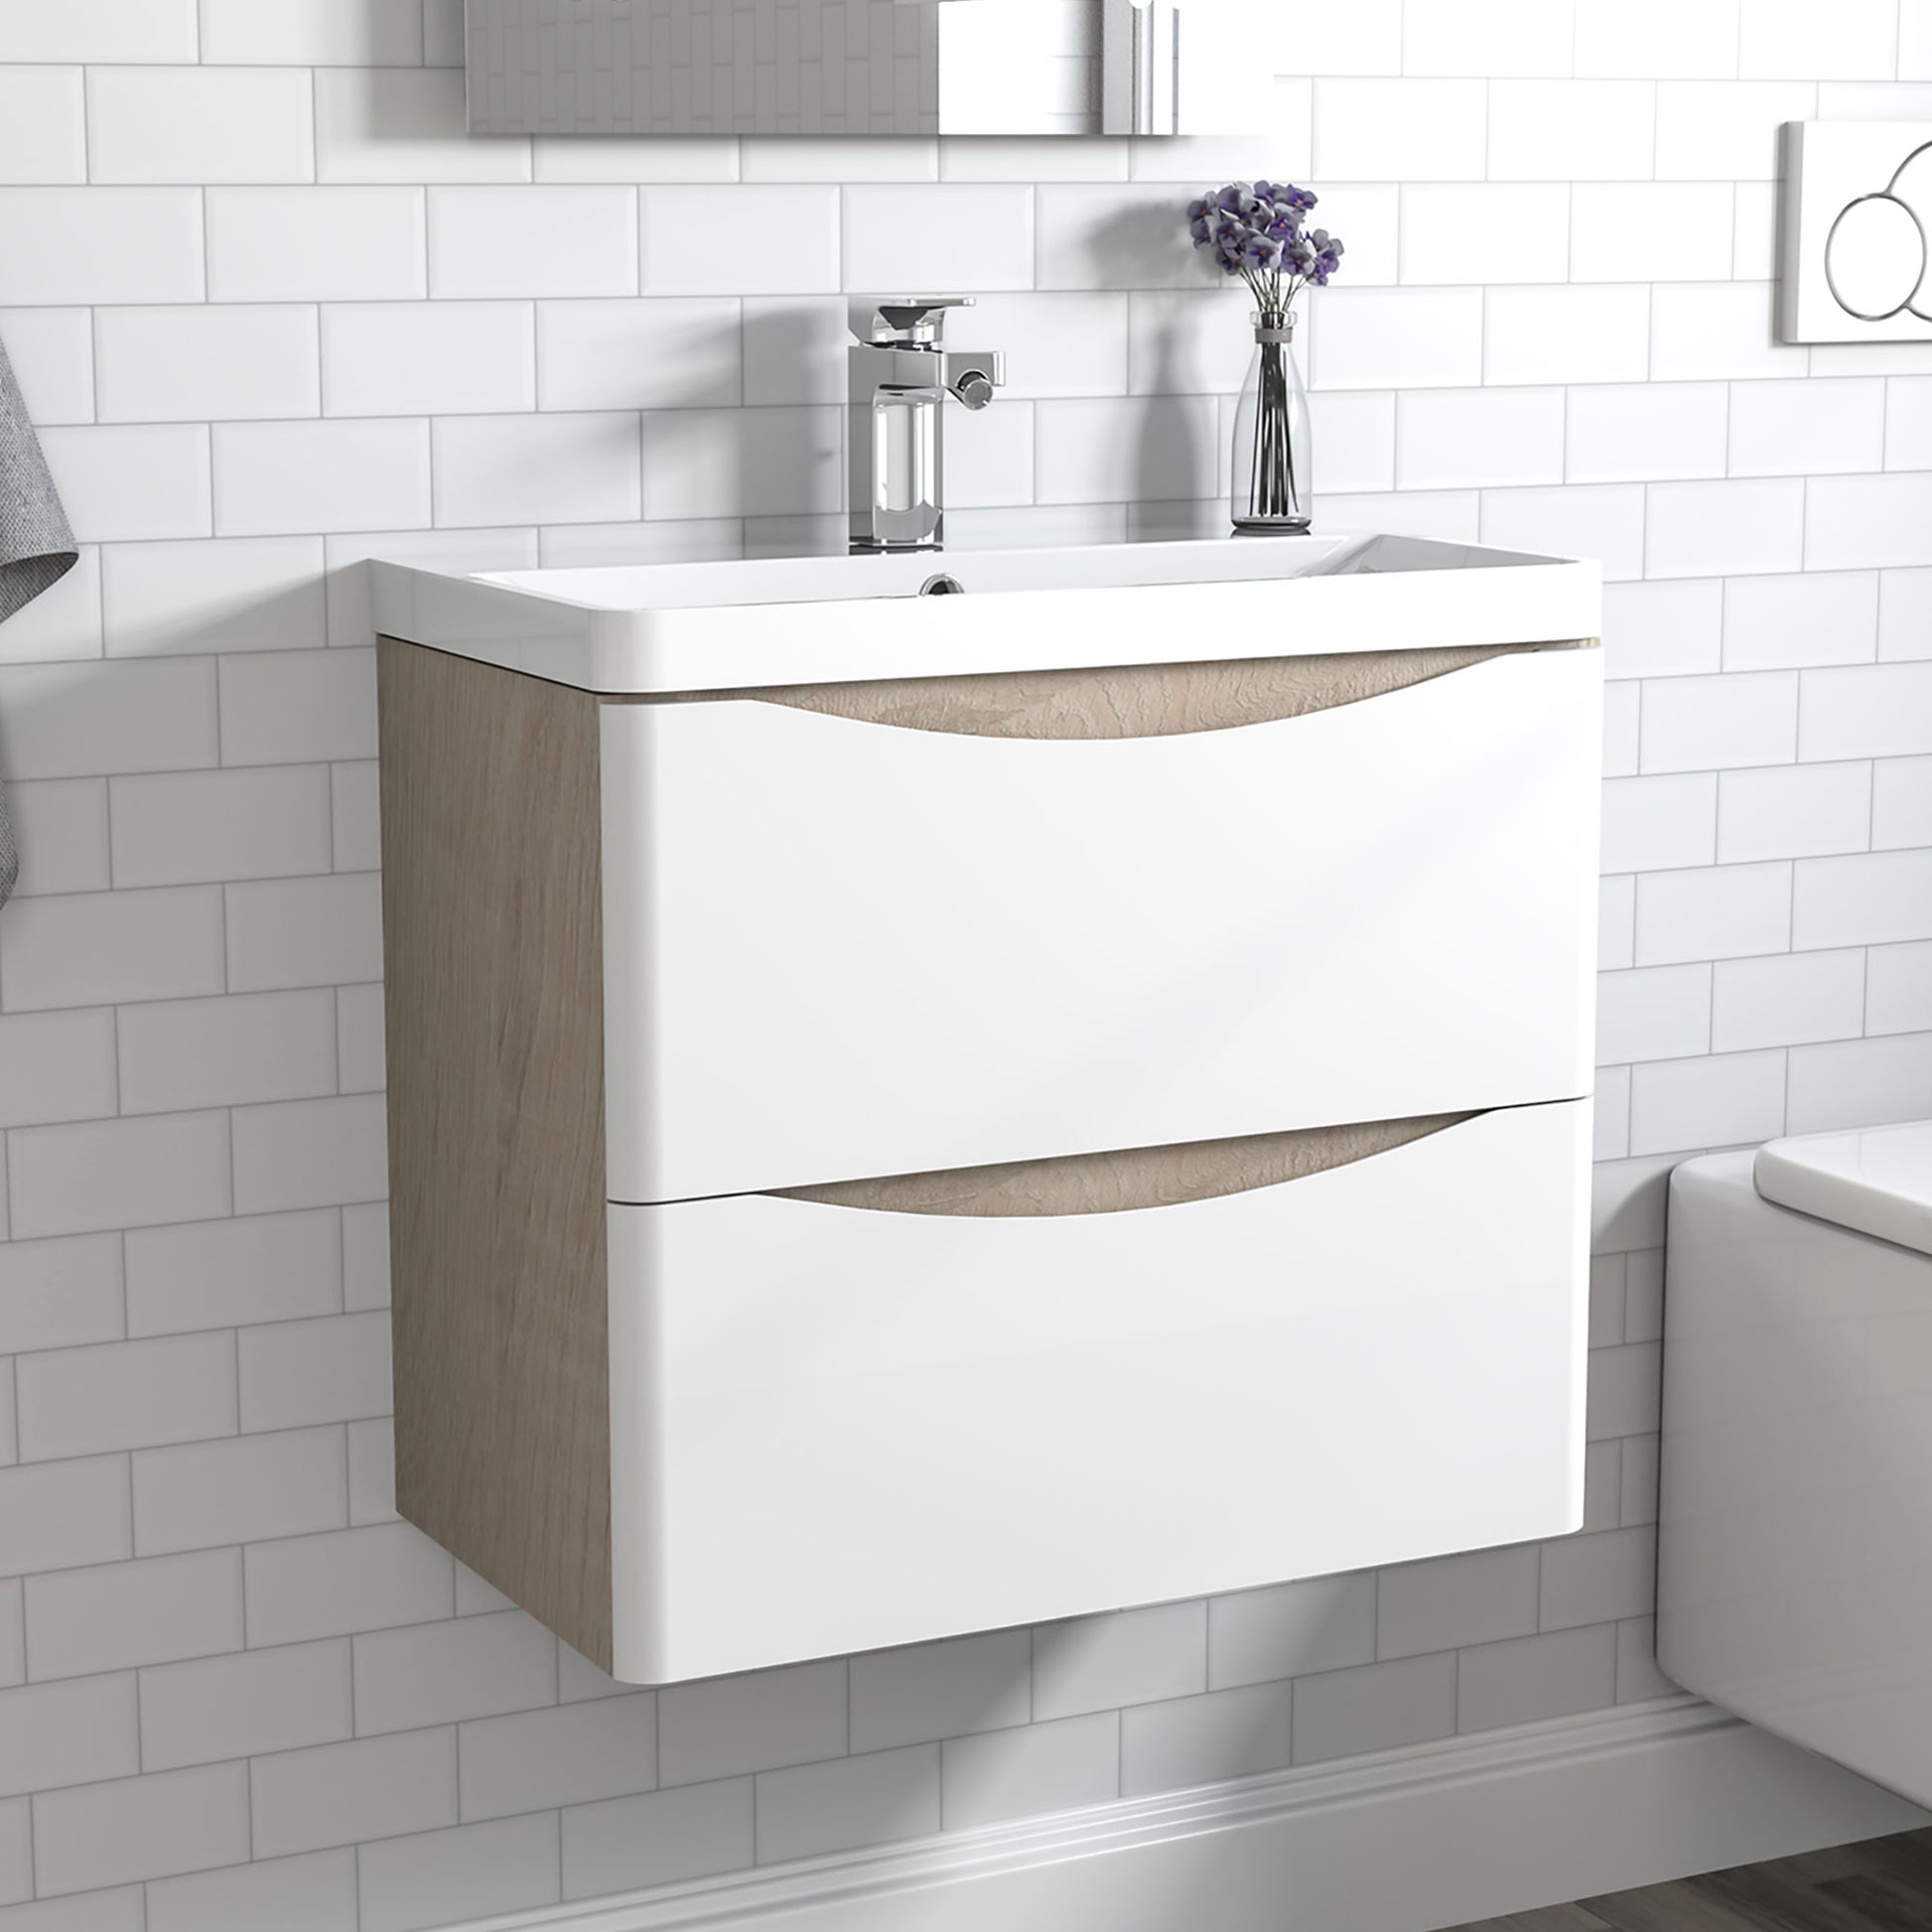 600mm Bathroom Oak Vanity Units with Resinous Sink Wall Mounted